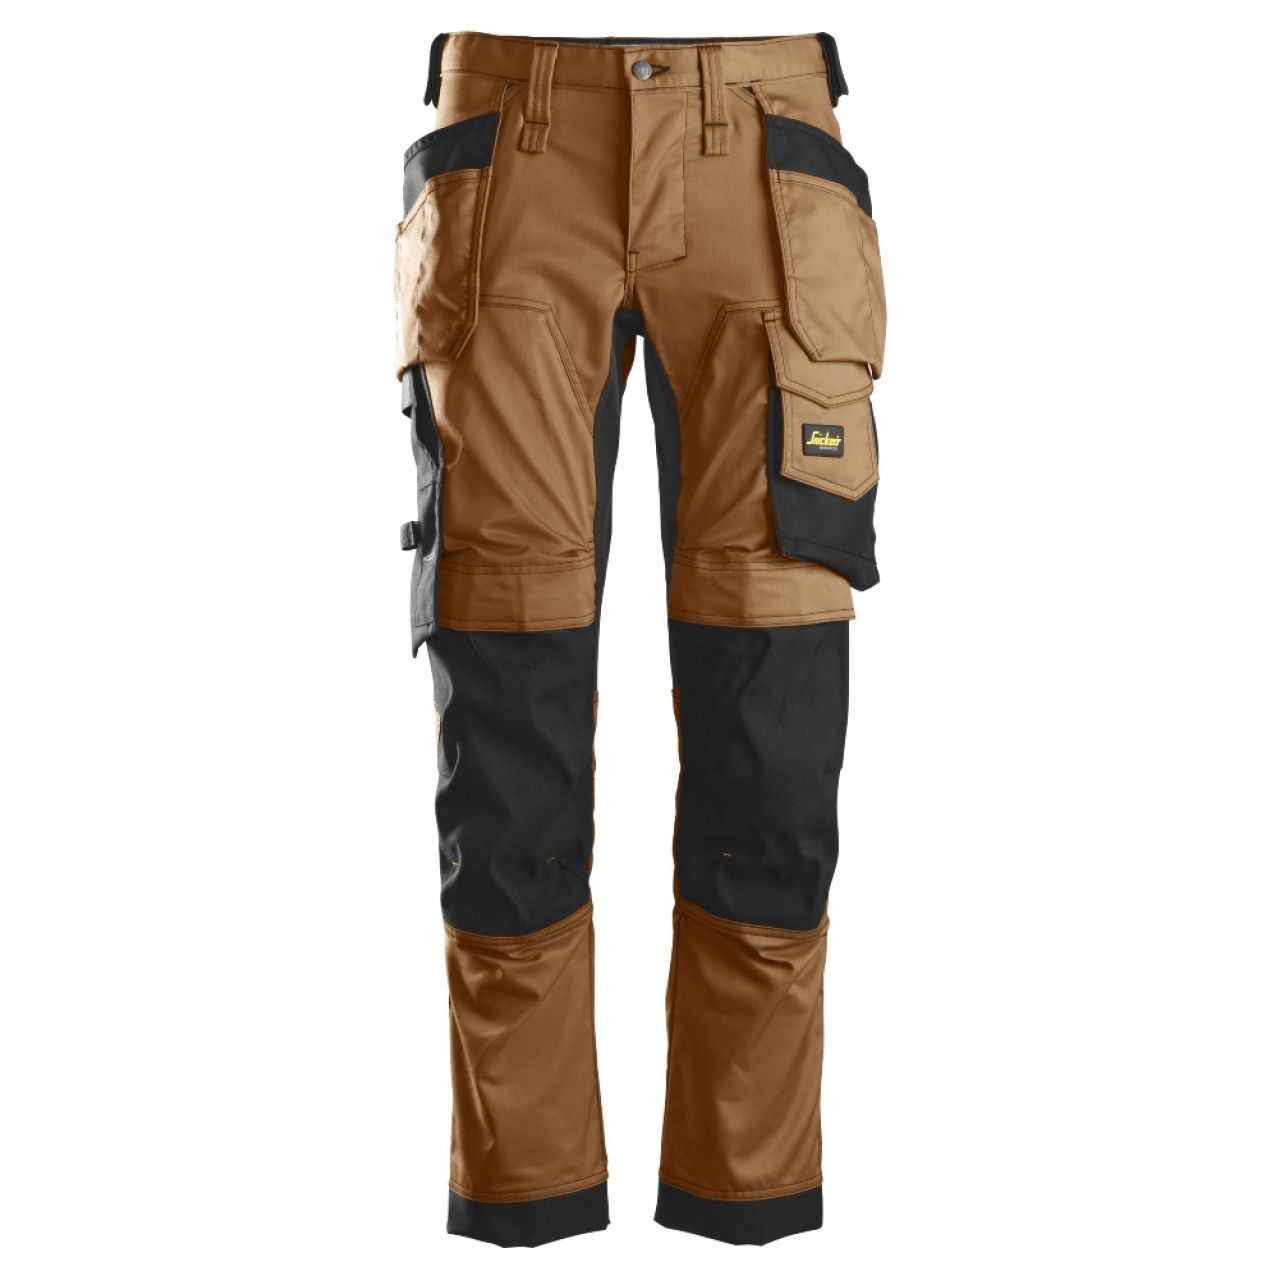 6241 Pantalones largos de trabajo elásticos con bolsillos flotantes AllroundWork marron-negro talla 148